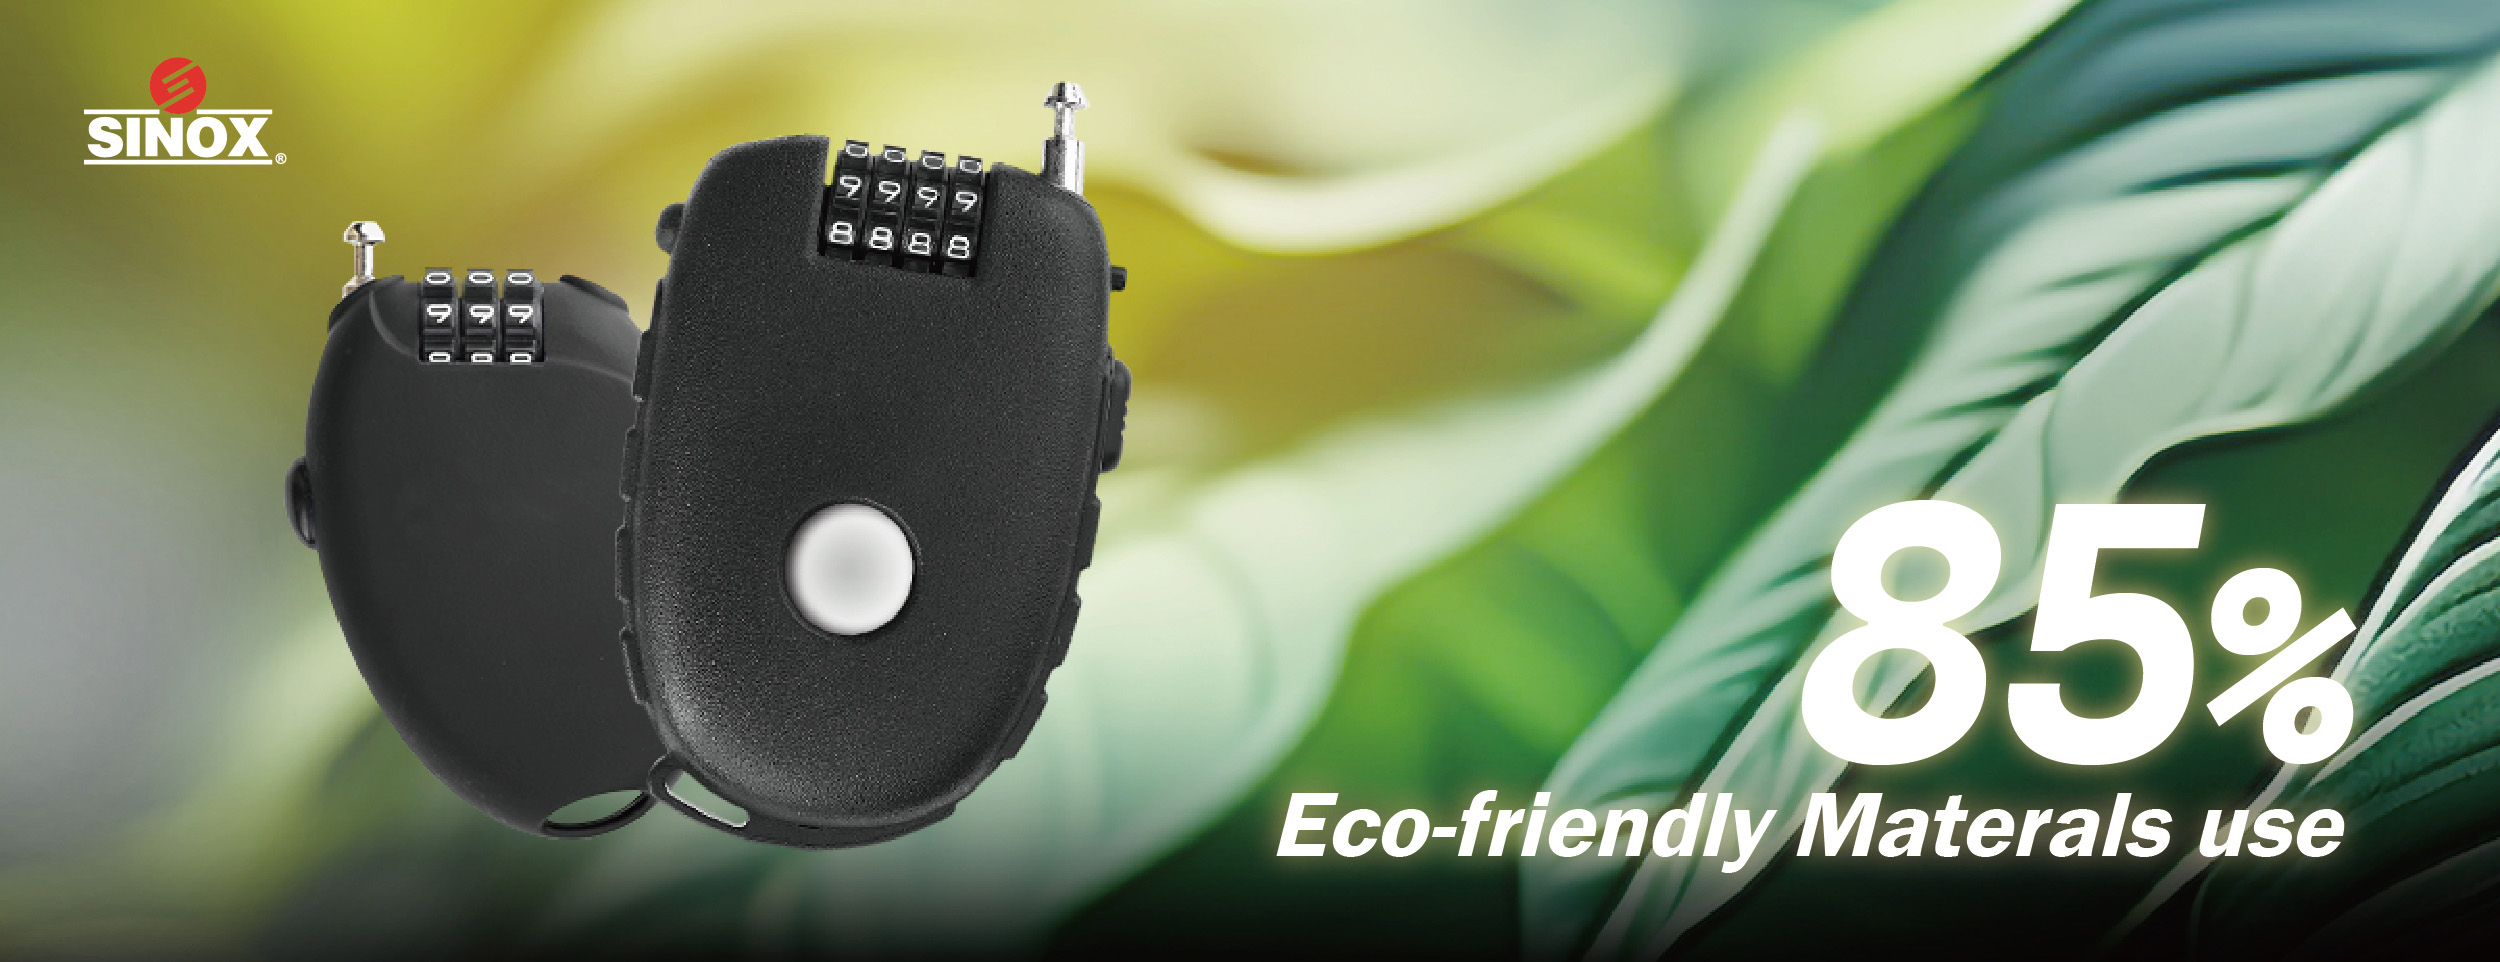 SINOX uses PCR 85% environmentally friendly materials to make innovative green products TL0956 and TL0981